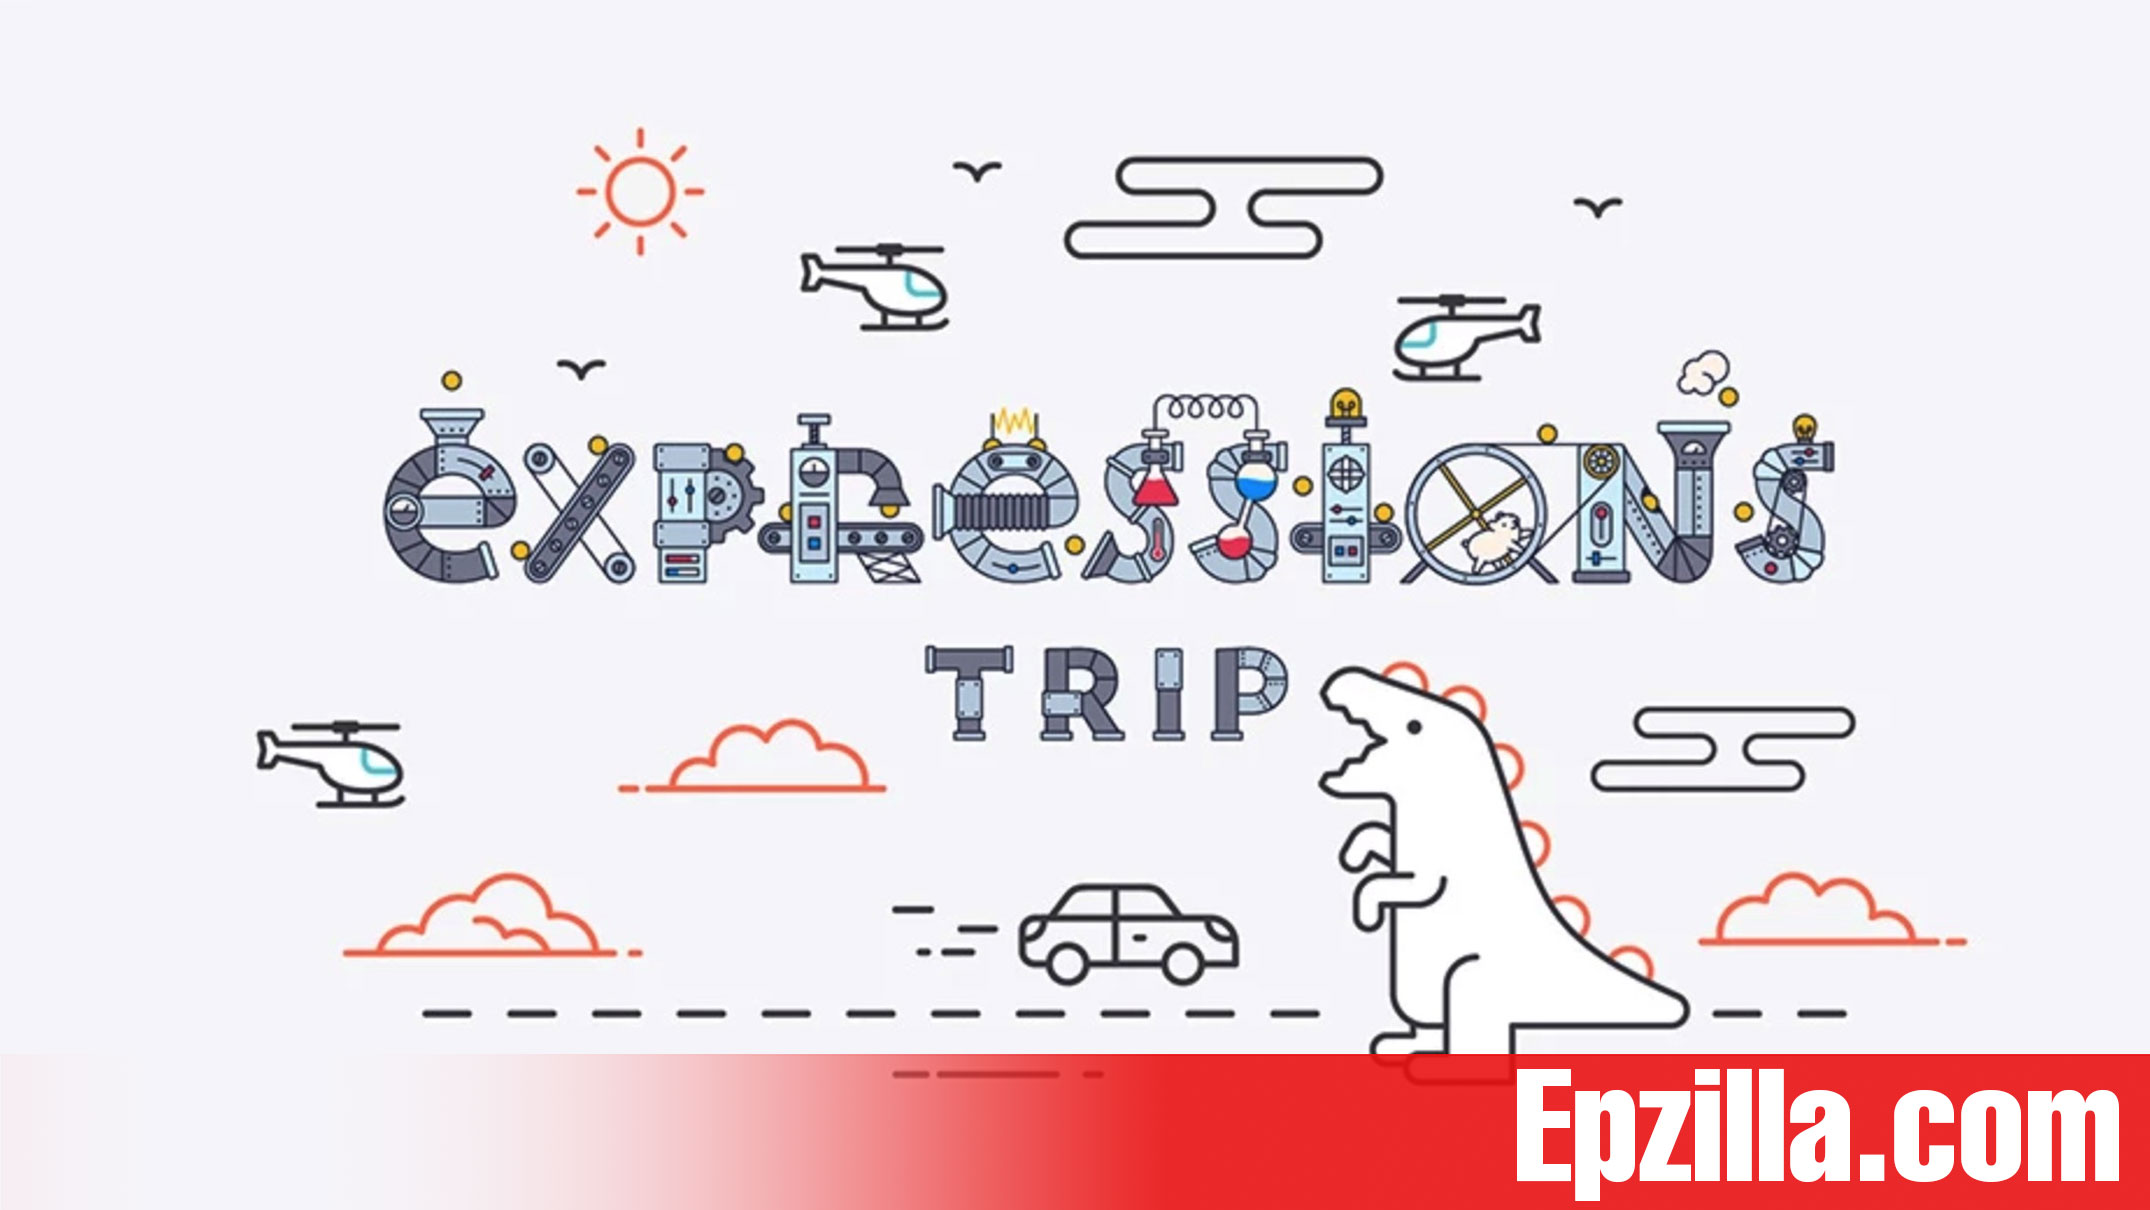 Motion Design School Expressions Trip Free Download Epzilla.com